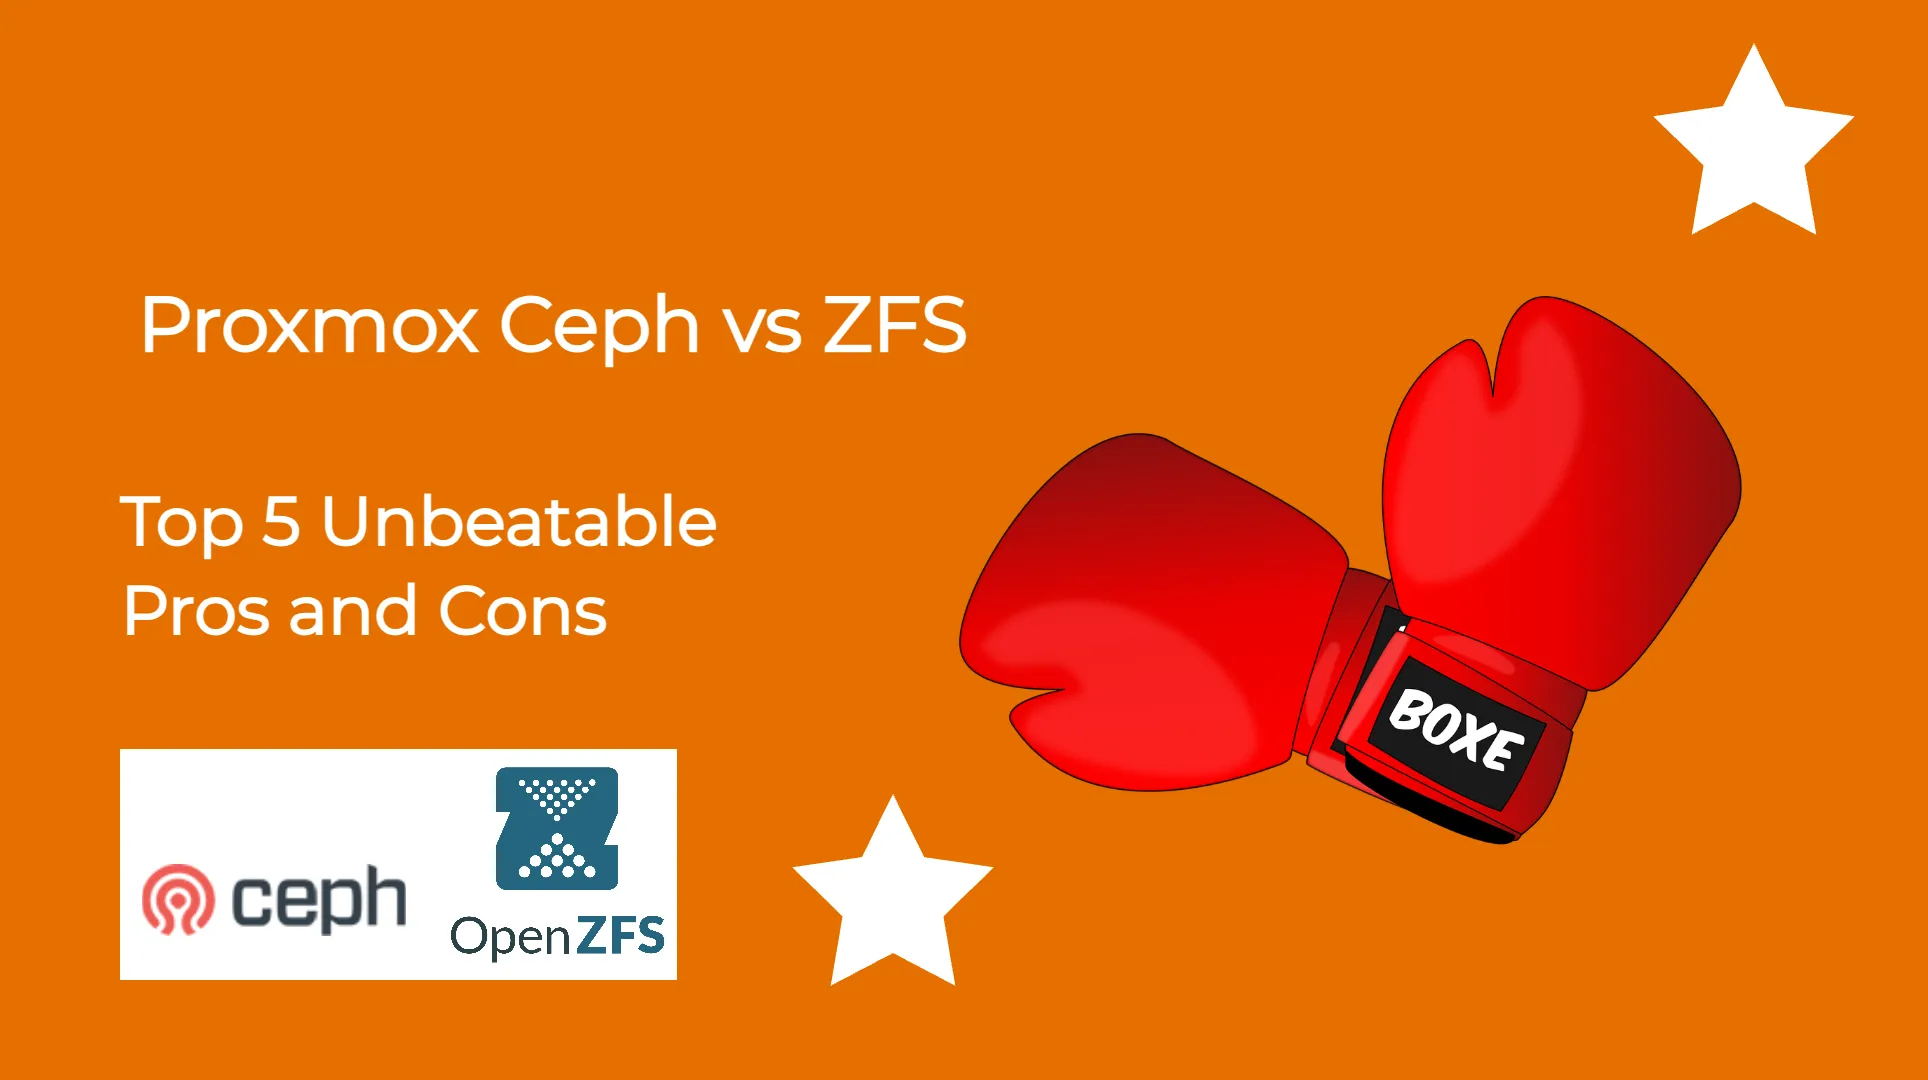 Proxmox Ceph vs ZFS